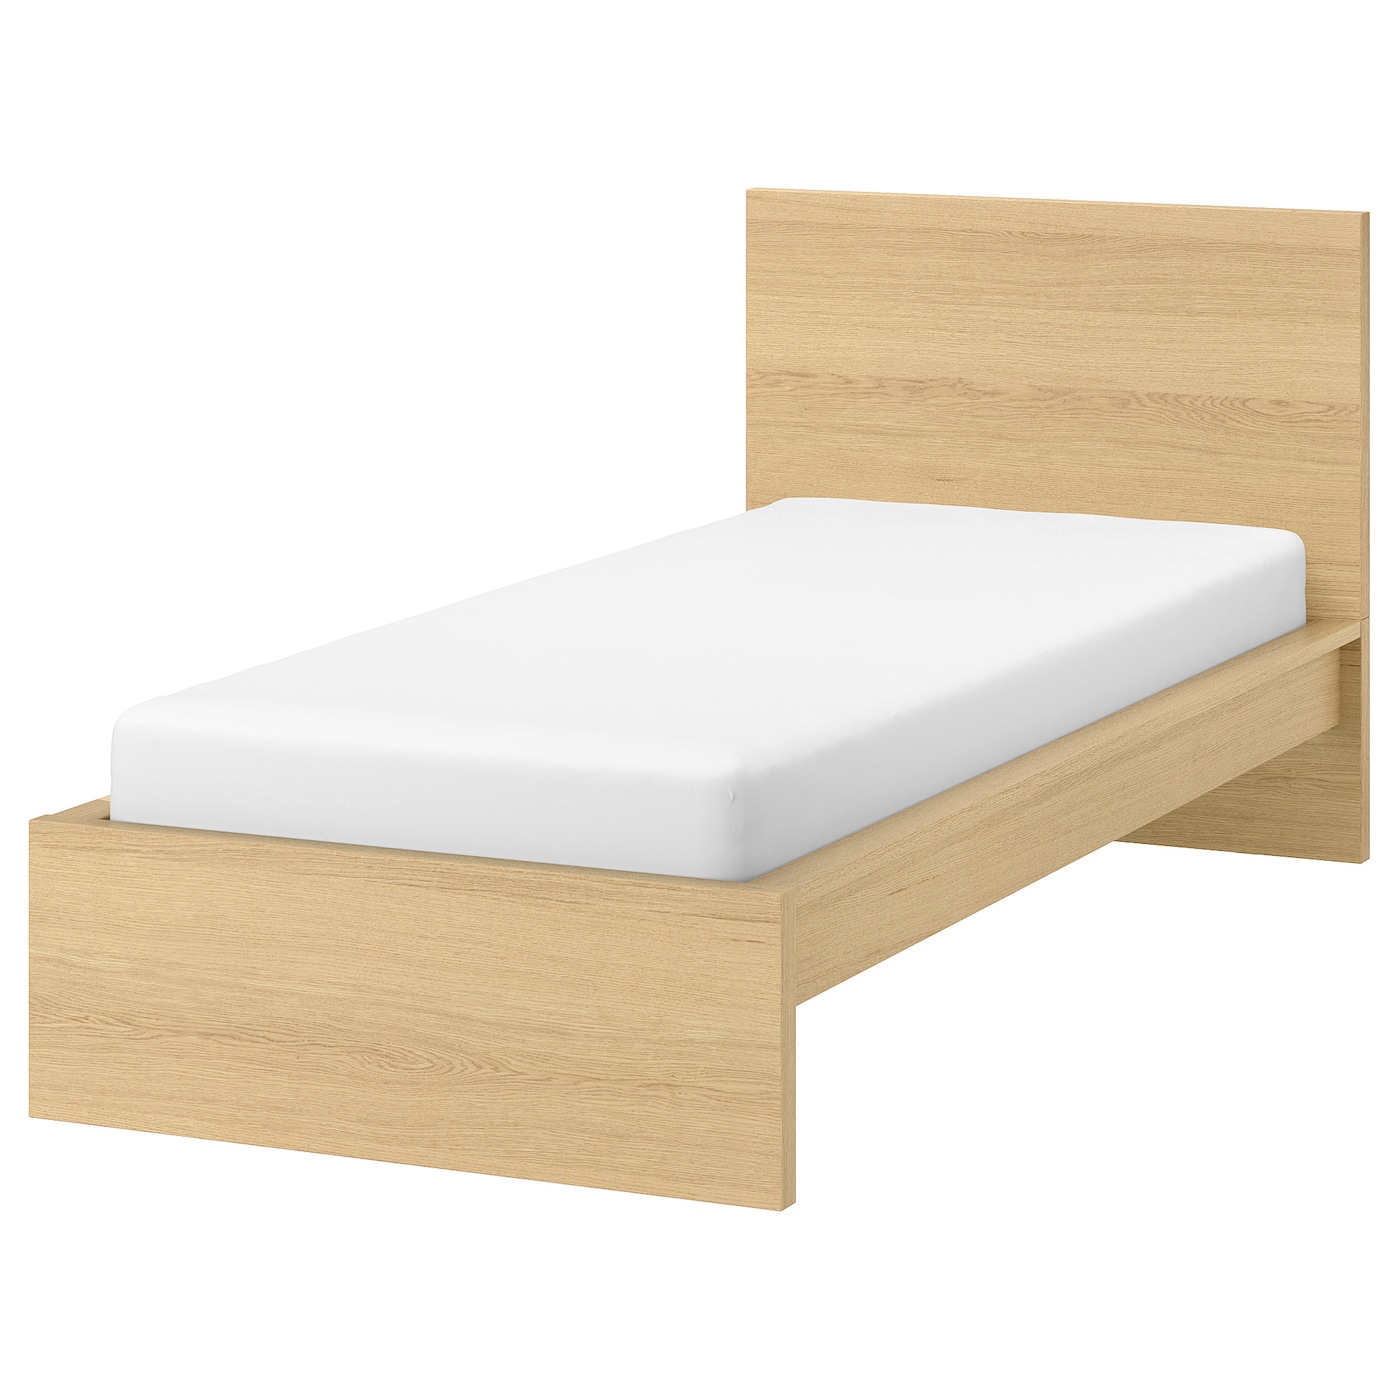 Каркас кровати, высокий - IKEA MALM, 200х90 см, под беленый дуб, МАЛЬМ ИКЕА